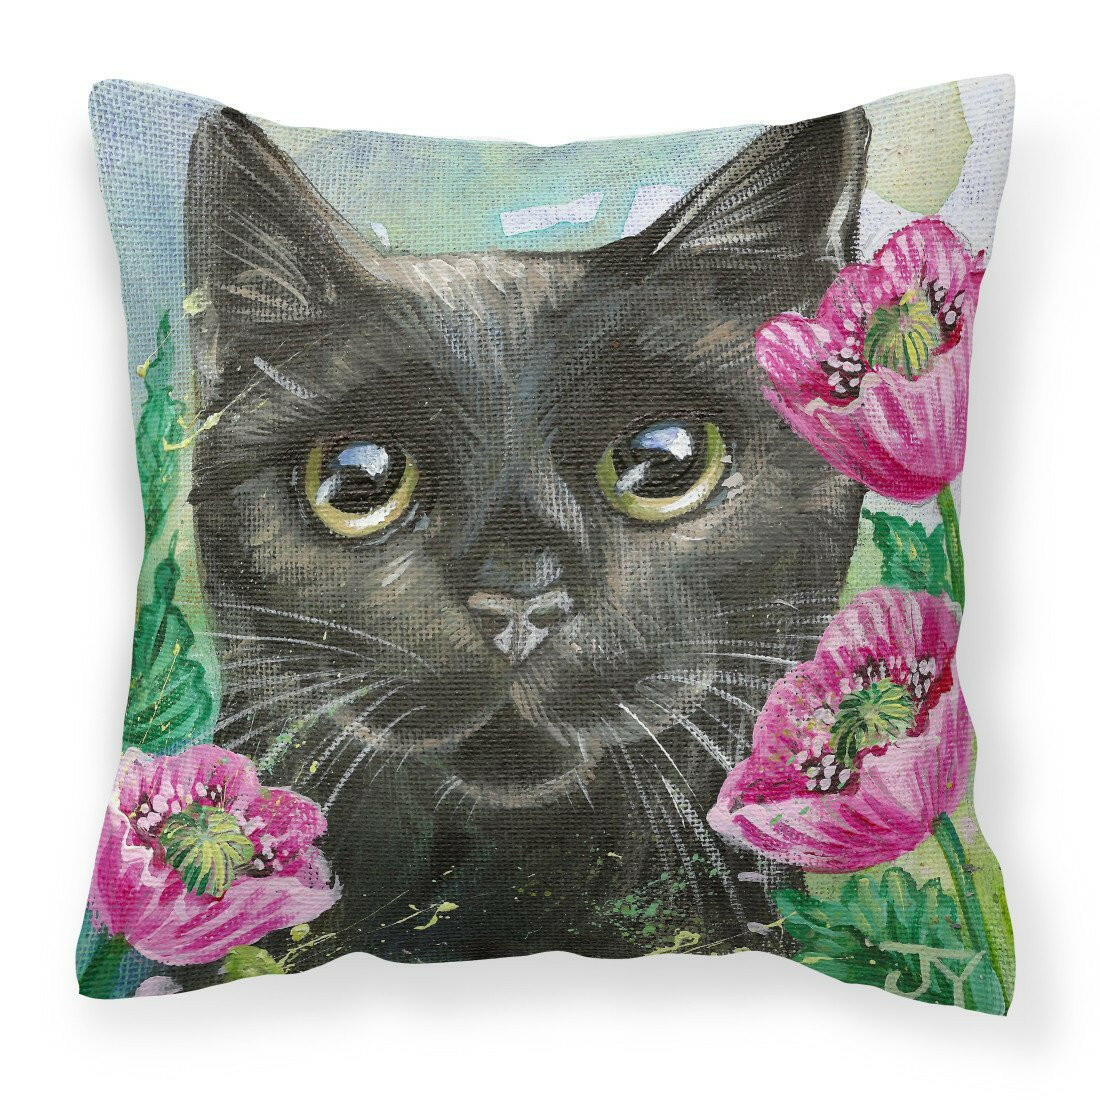 Black Cat in Flowers Fabric Decorative Pillow JYJ0176PW1414 by Caroline's Treasures